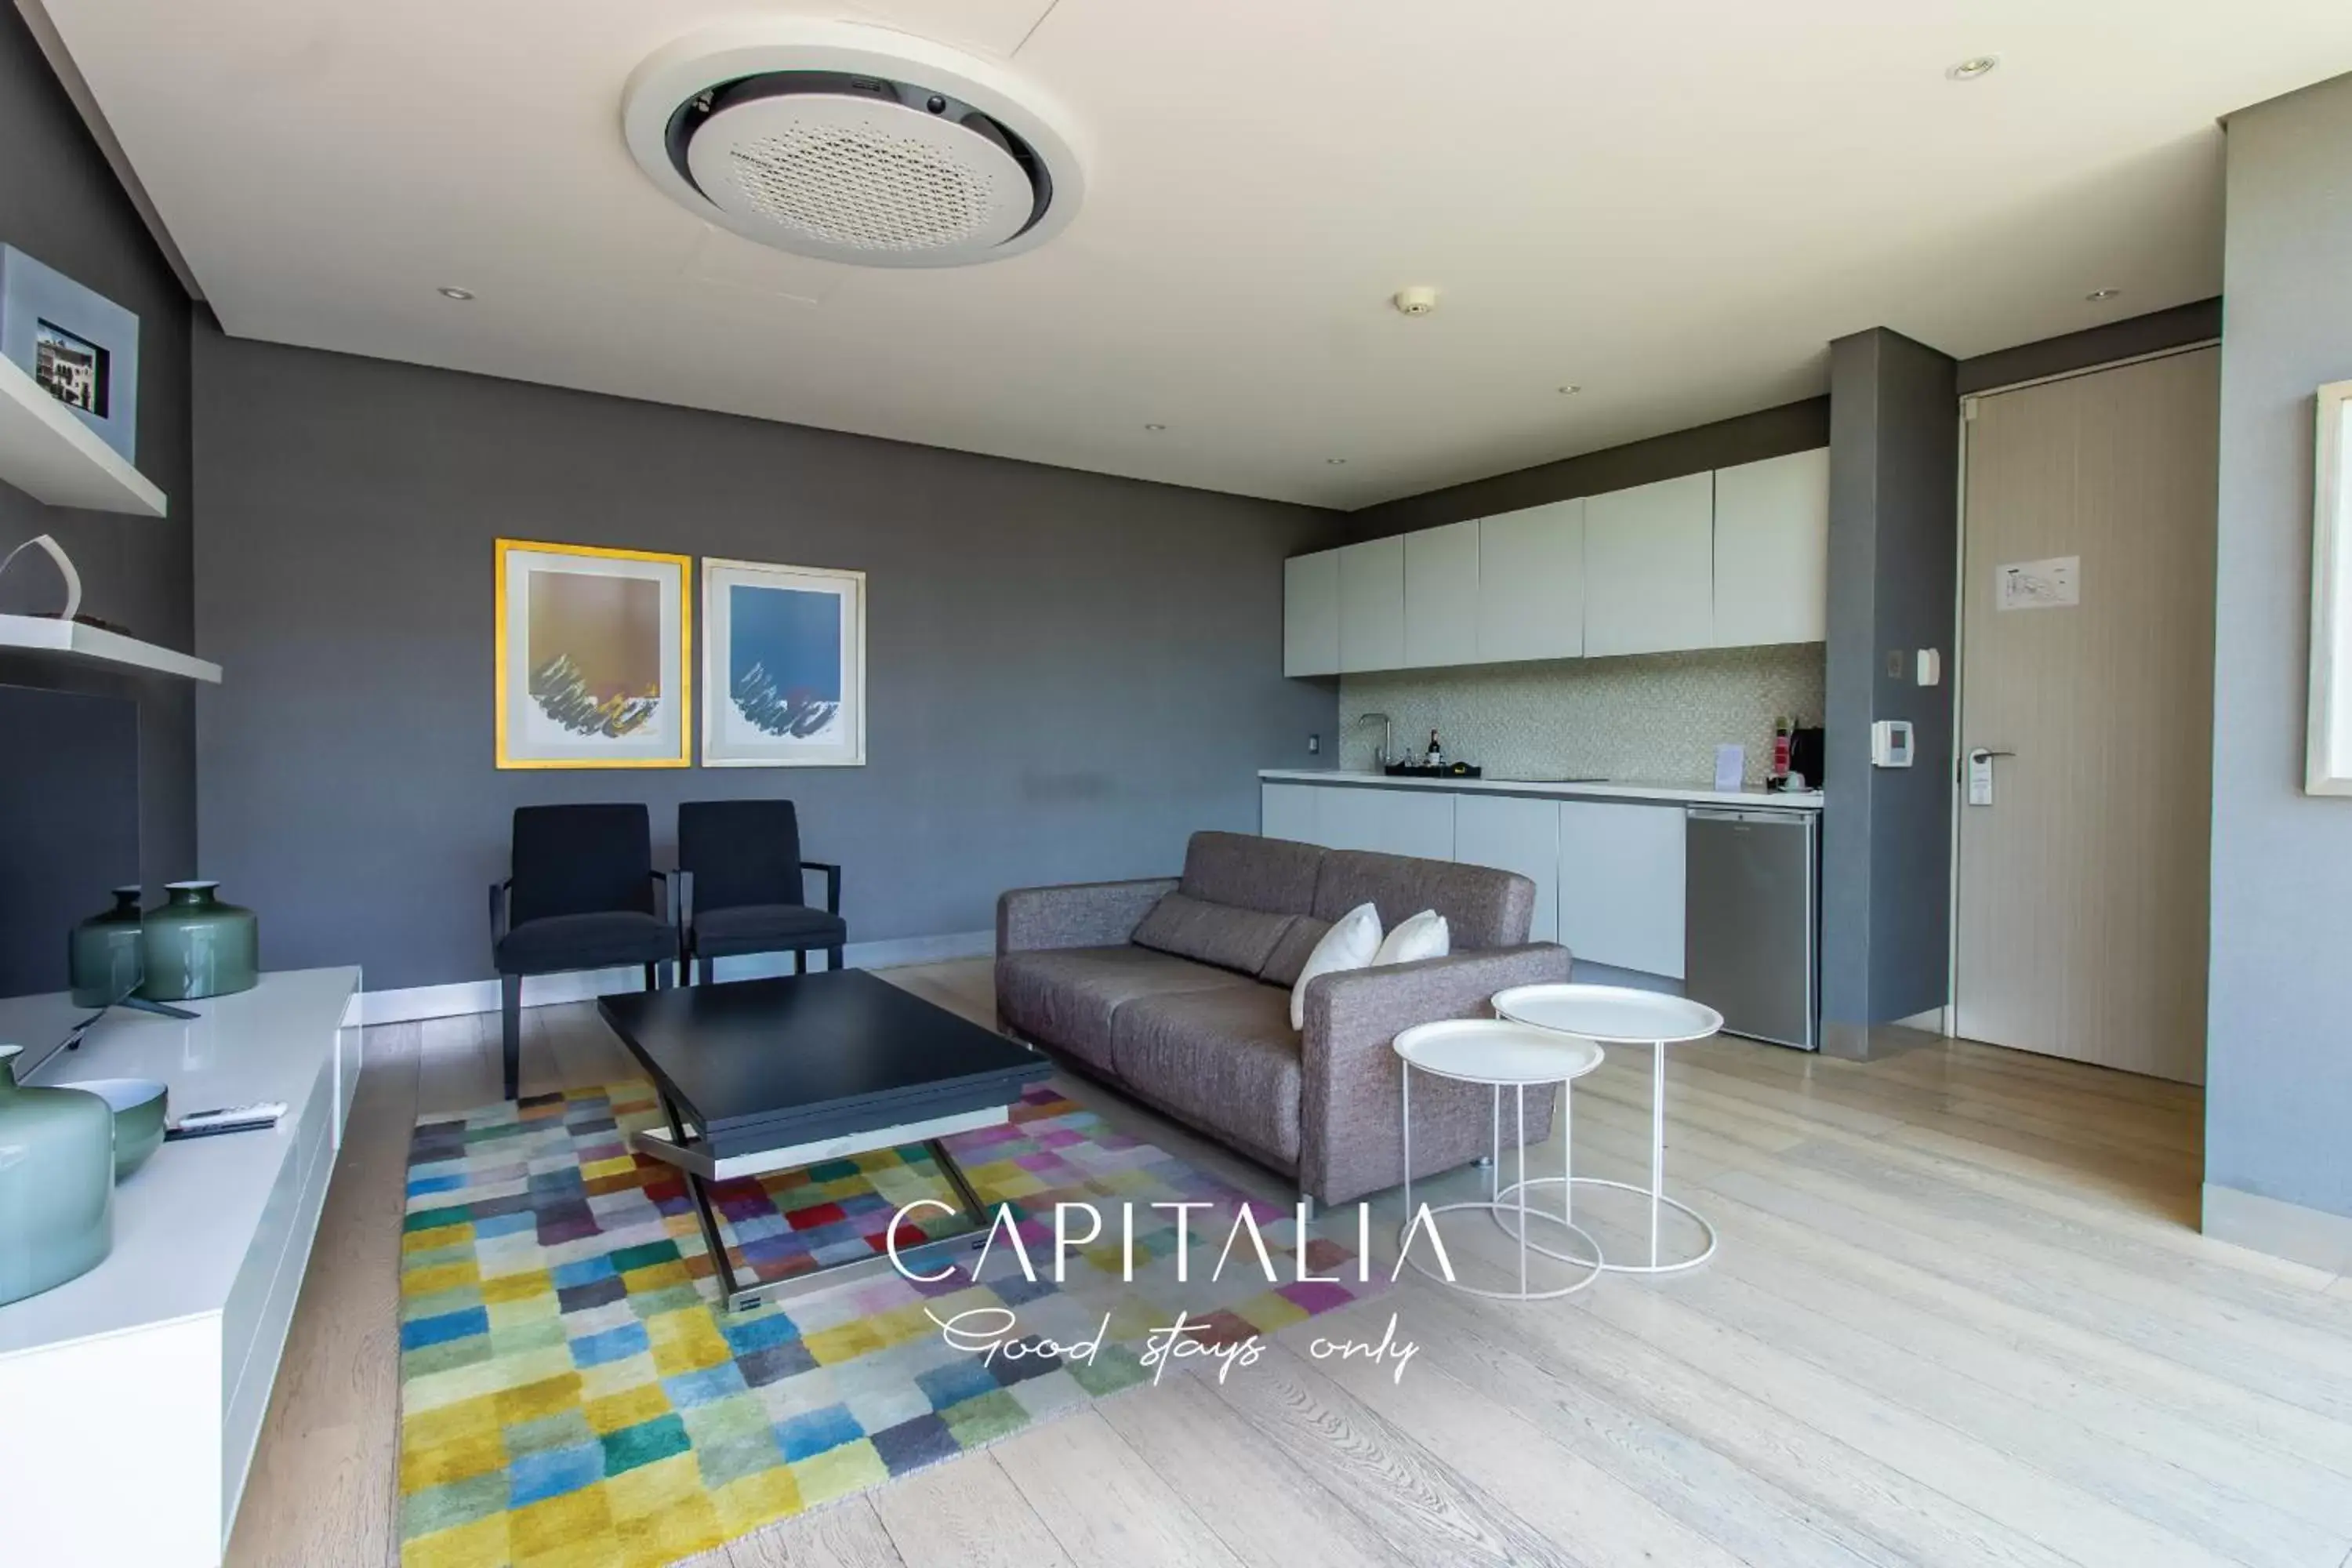 Superior Apartment in Capitalia - ApartHotel - San Angel Inn